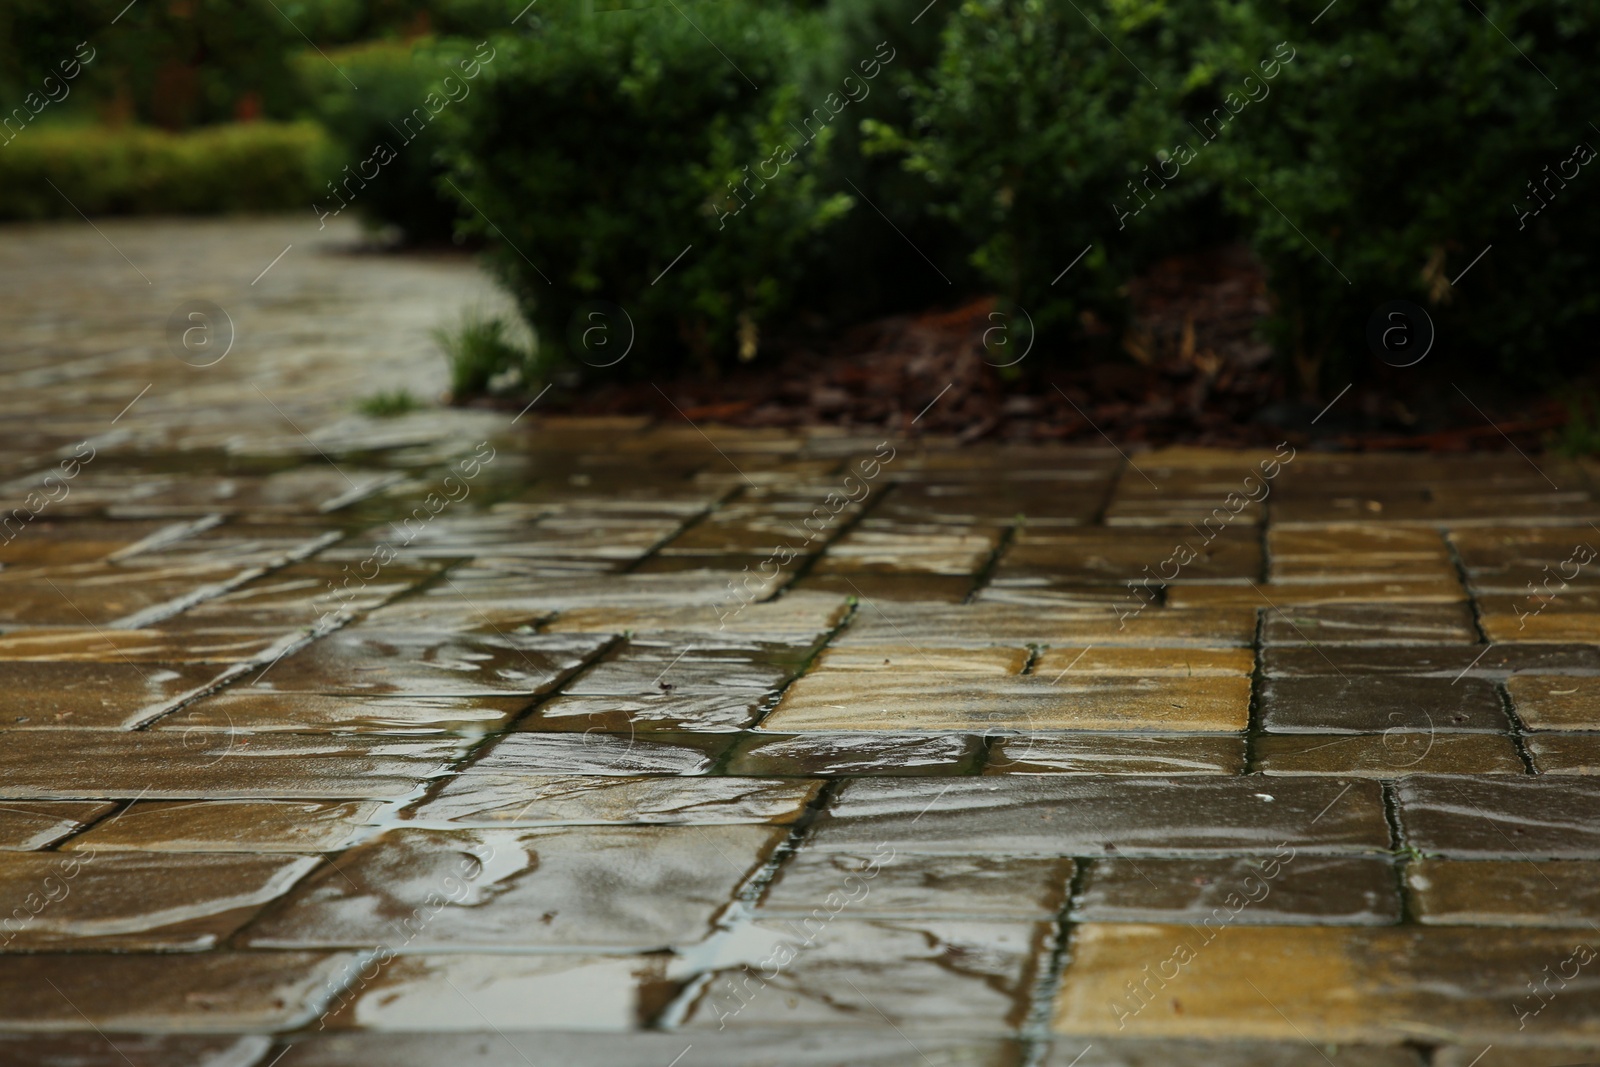 Photo of Wet street tiles outdoors on rainy day